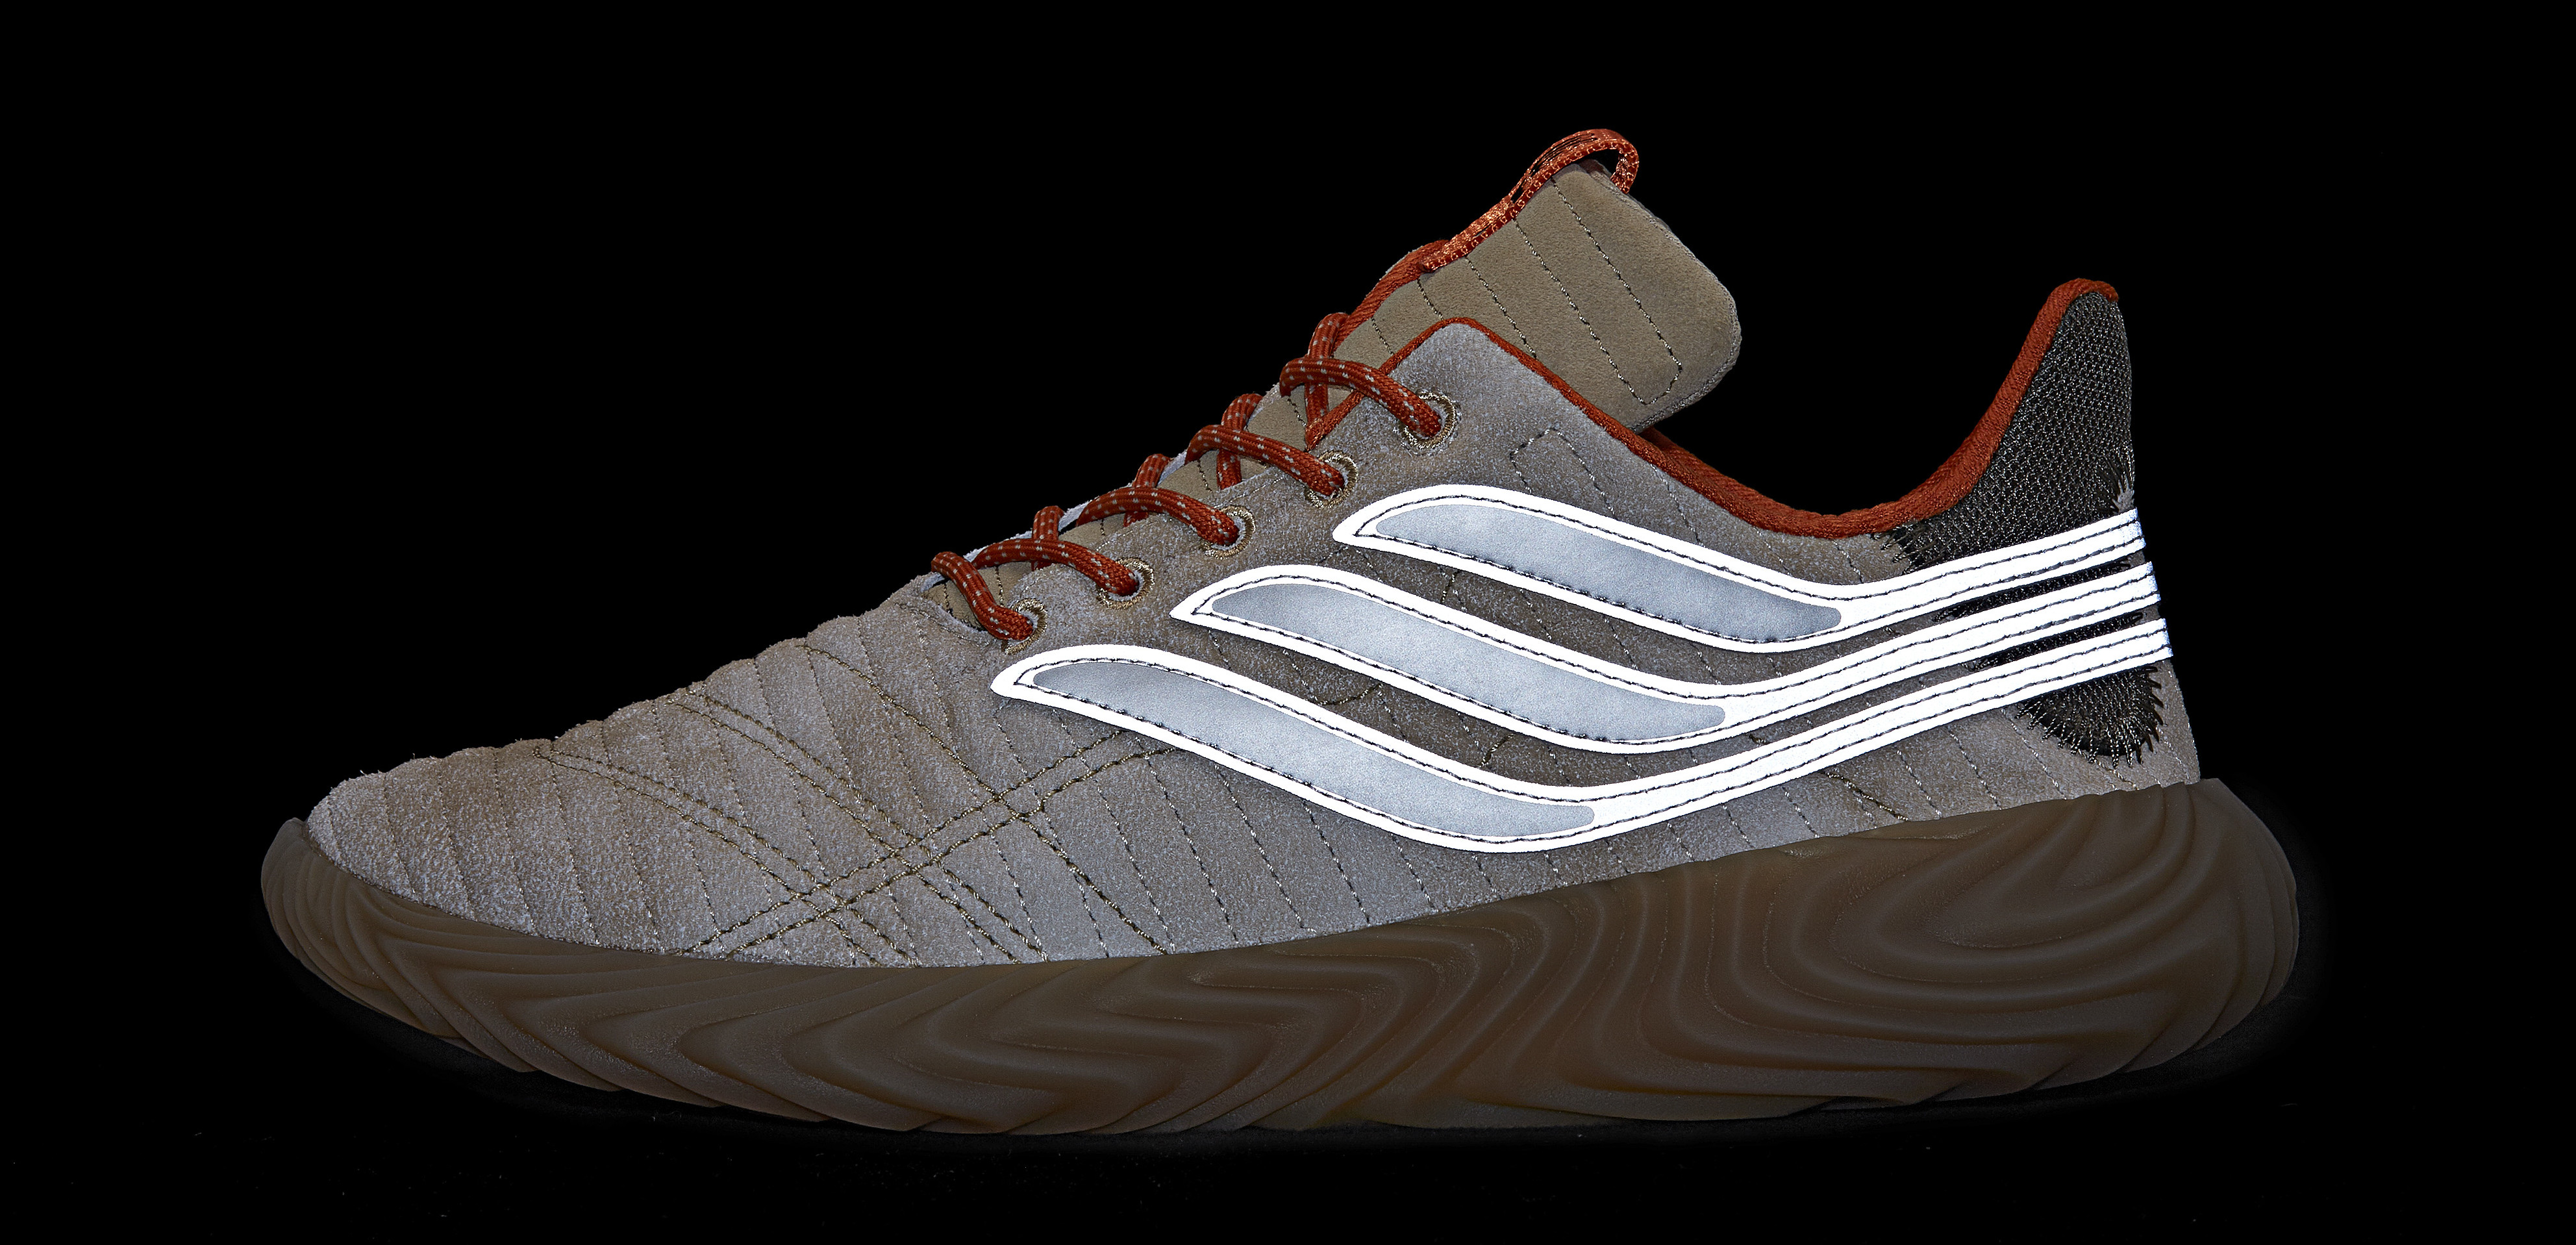 versterking ingenieur Kleuterschool Bodega Reworks Adidas' Soccer-Inspired Sneakers | Complex